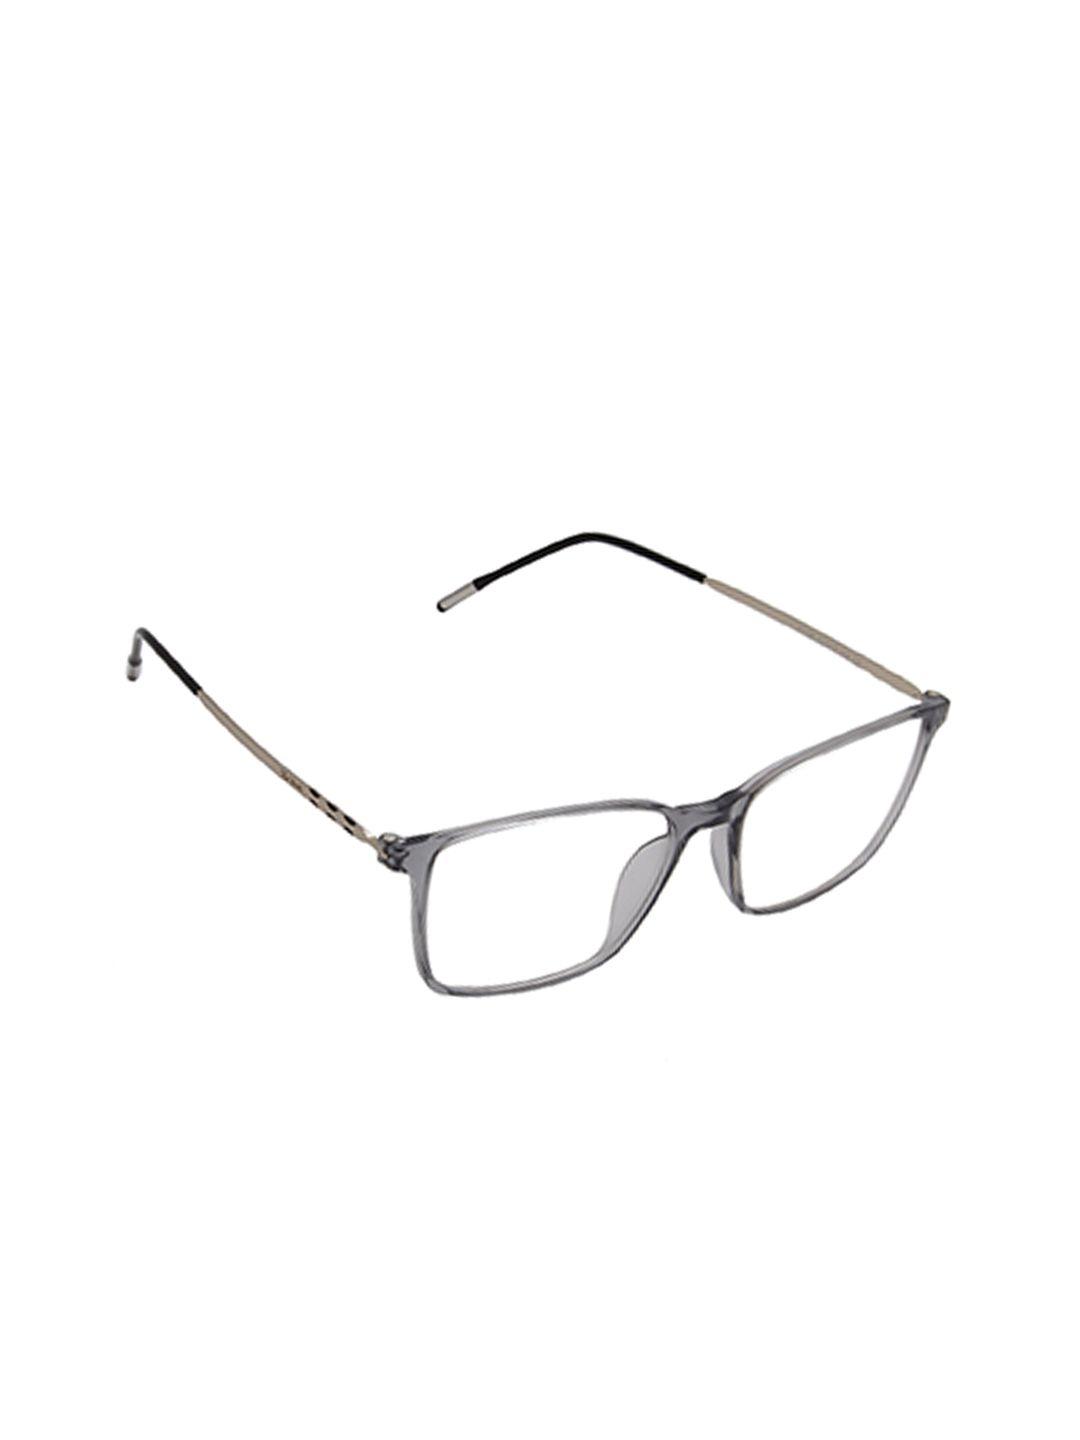 ted smith unisex grey & black full rim rectangle frameframes eyeglasses